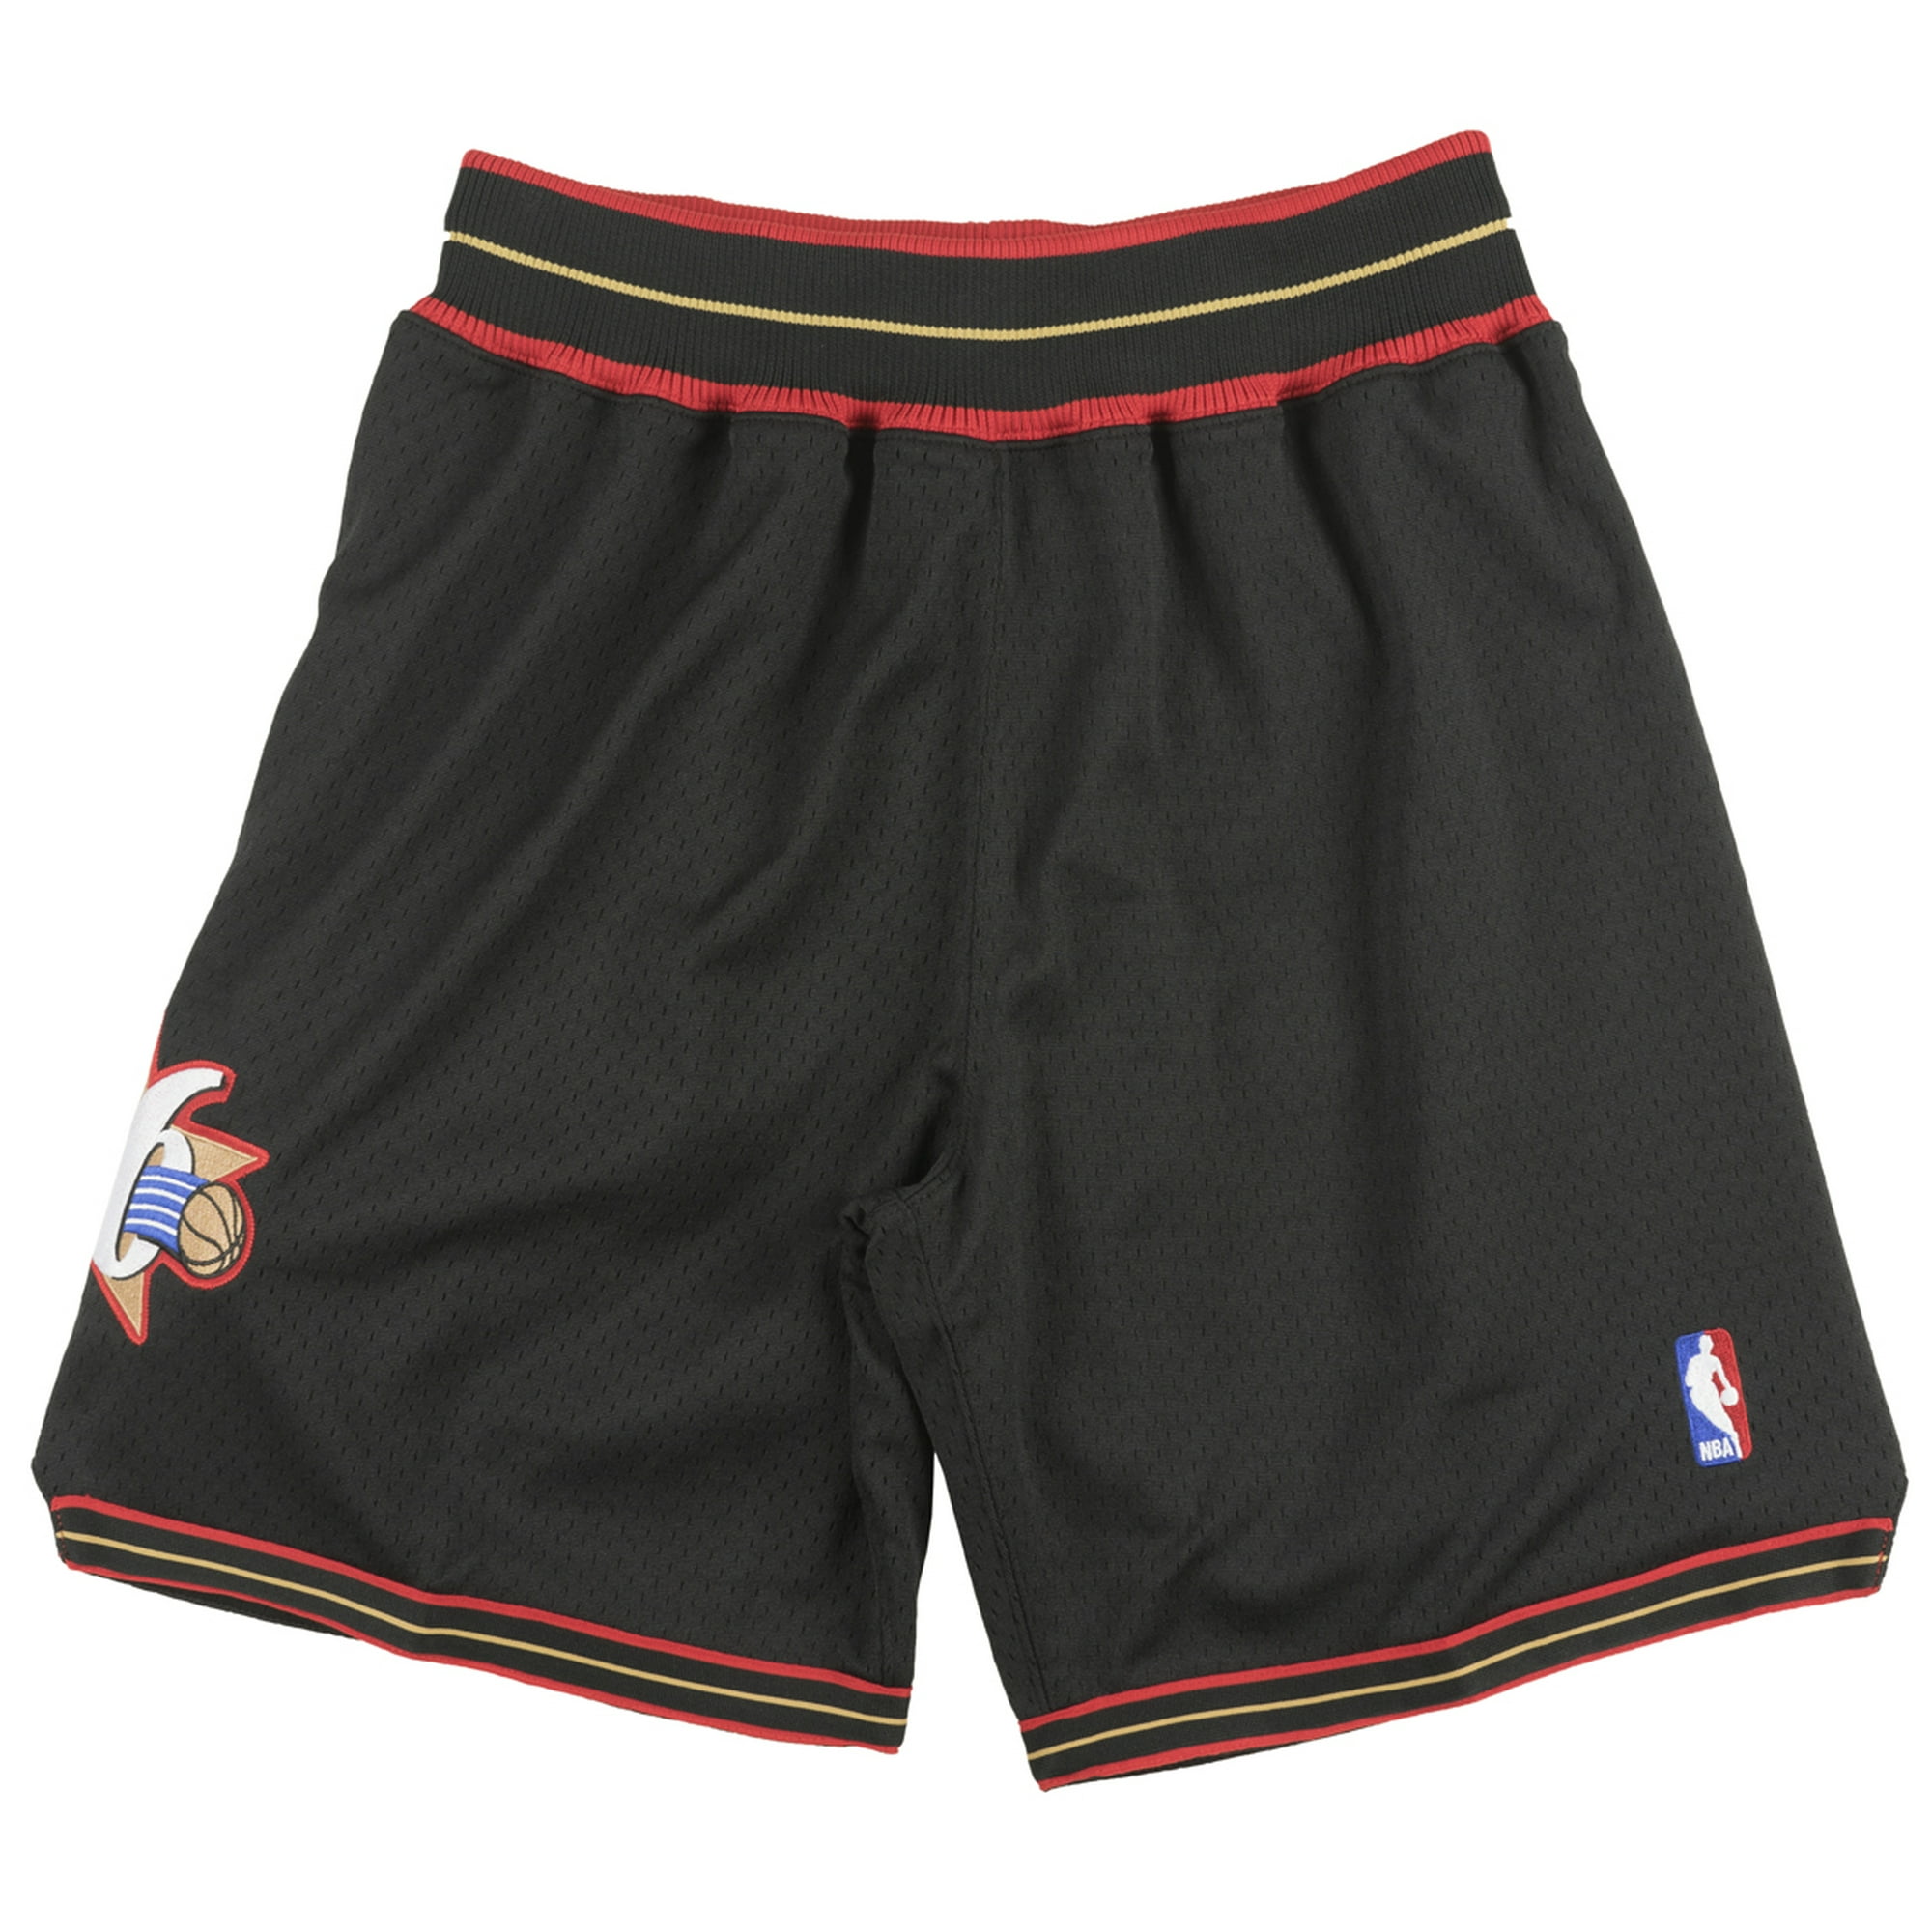 76ers black shorts